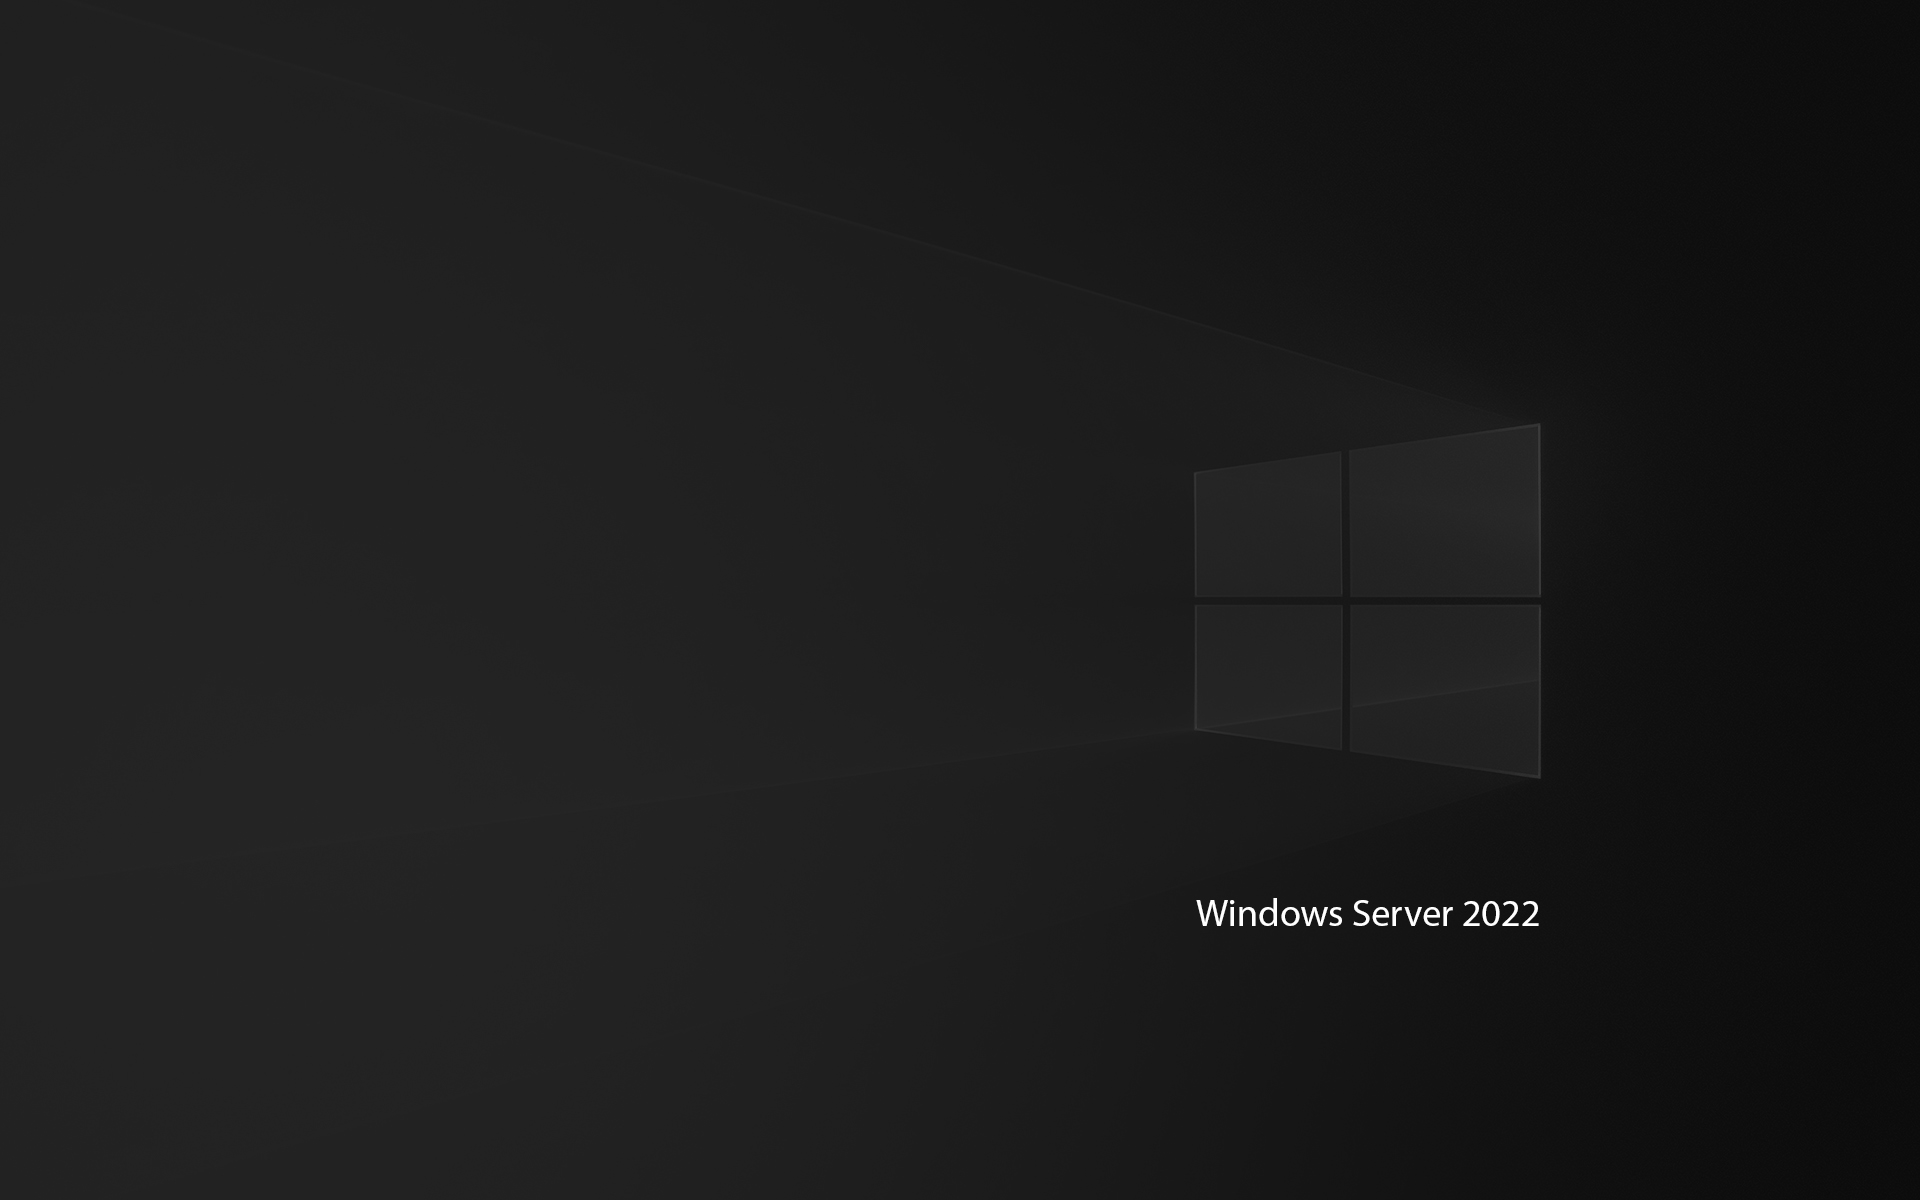 Windows Server 2022 Wallpaper